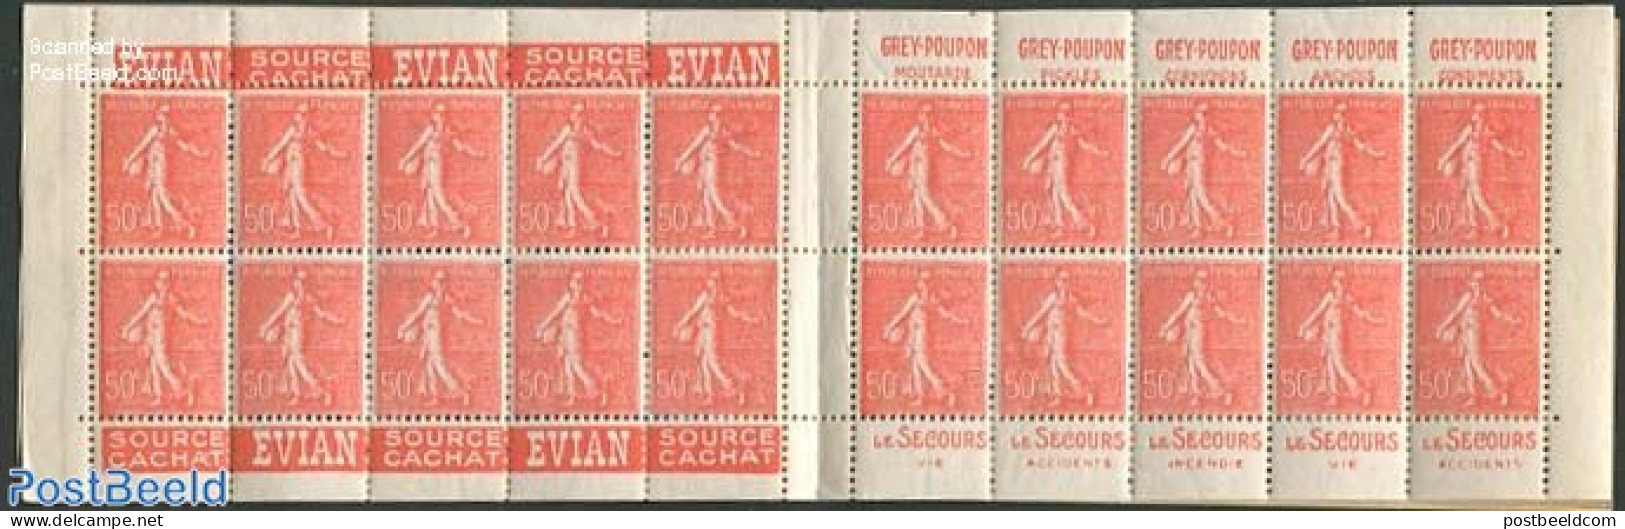 France 1924 20x50c Booklet (Evian-Grey Pooupon-Evian-Le Secours), Mint NH, Stamp Booklets - Ongebruikt